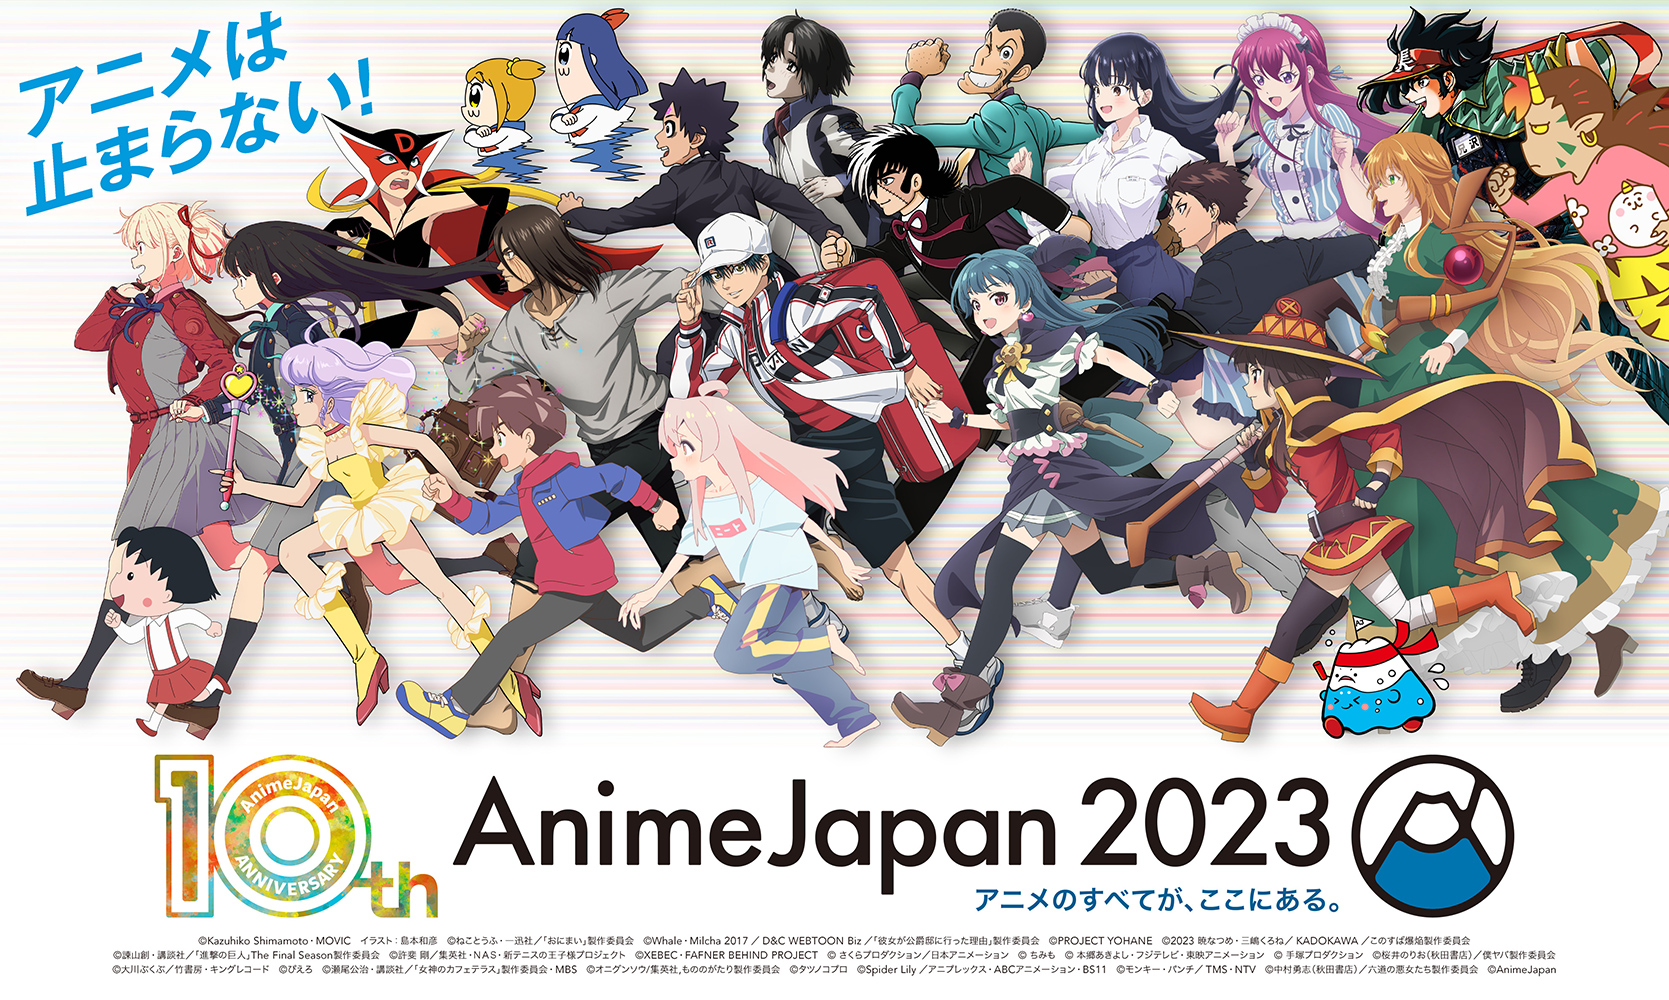 AnimeJapan（アニメジャパン）2023 ステージ観覧券 抽選申込ページ｜CN